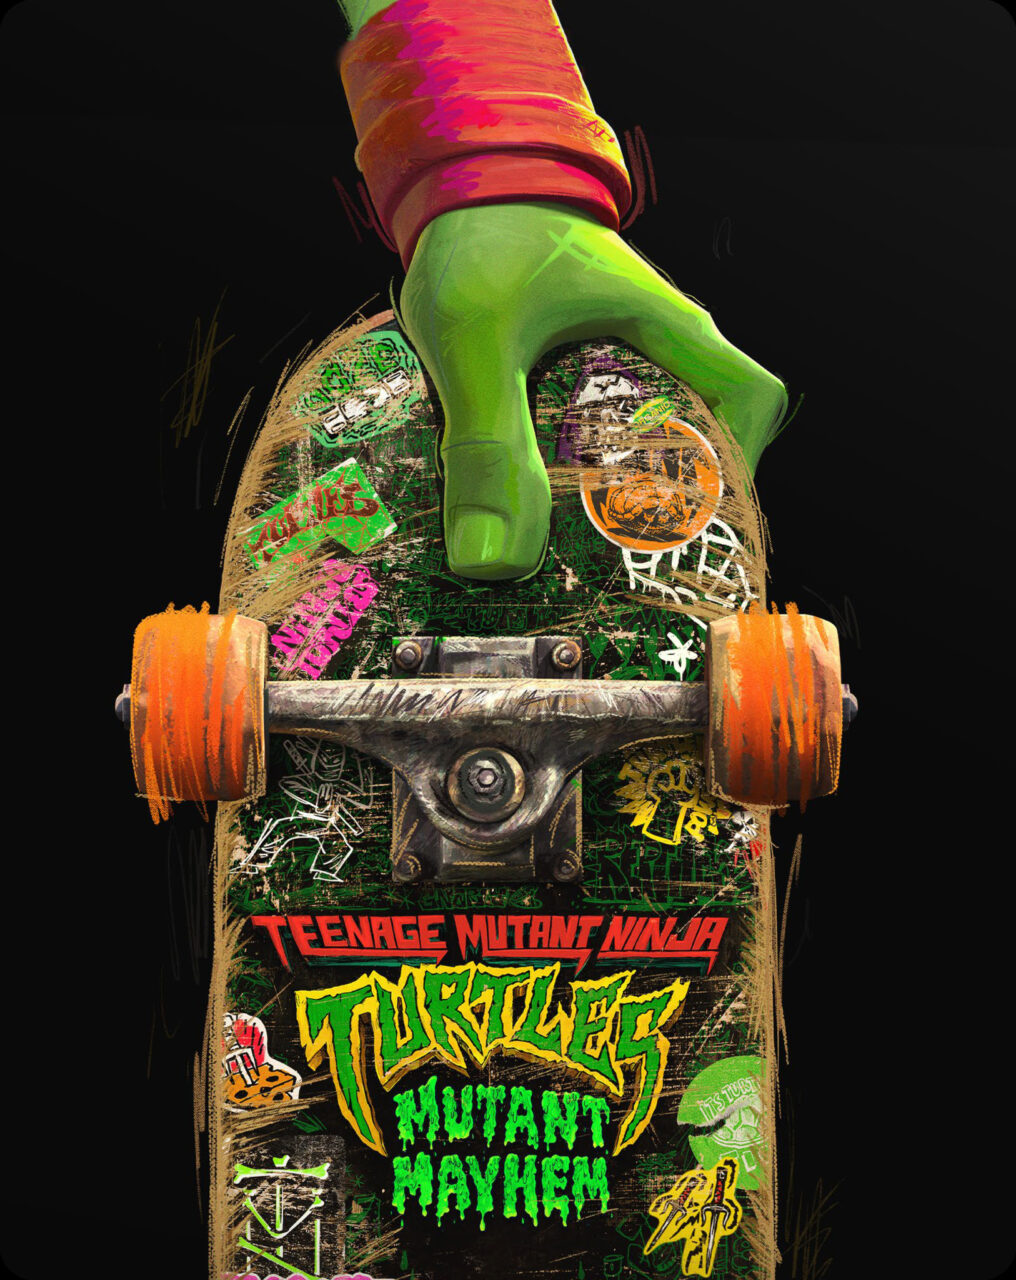 Teenage Mutant Ninja Turtles Mutant Mayhem 4K Ultra HD Combo pack cover (Paramount Home Entertainment)